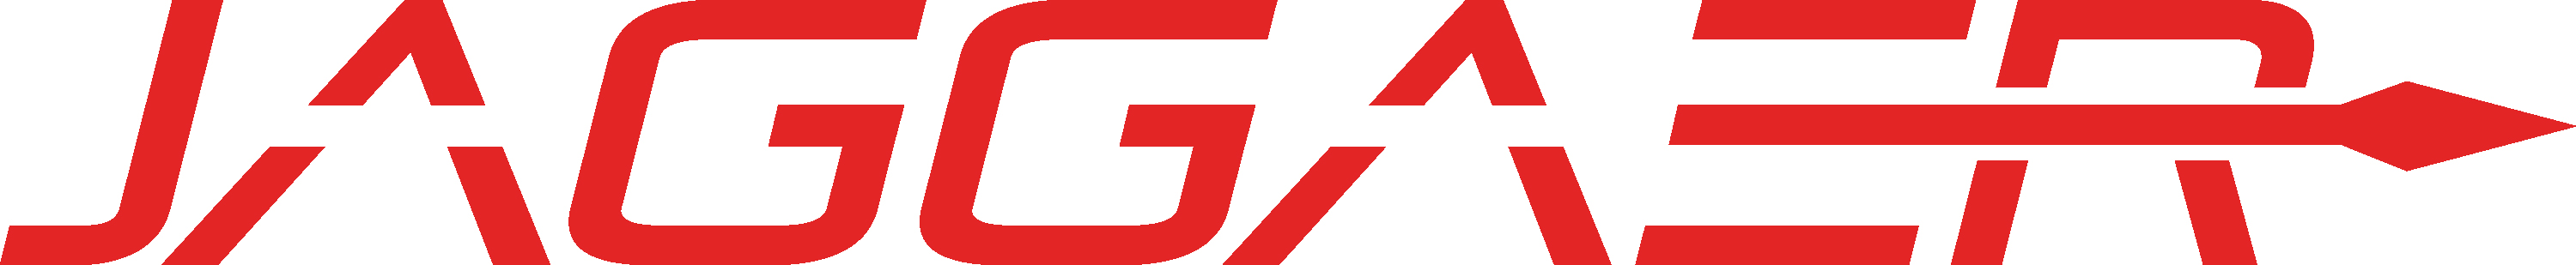 Jaggaer Logo FINAL PANTONE.jpg